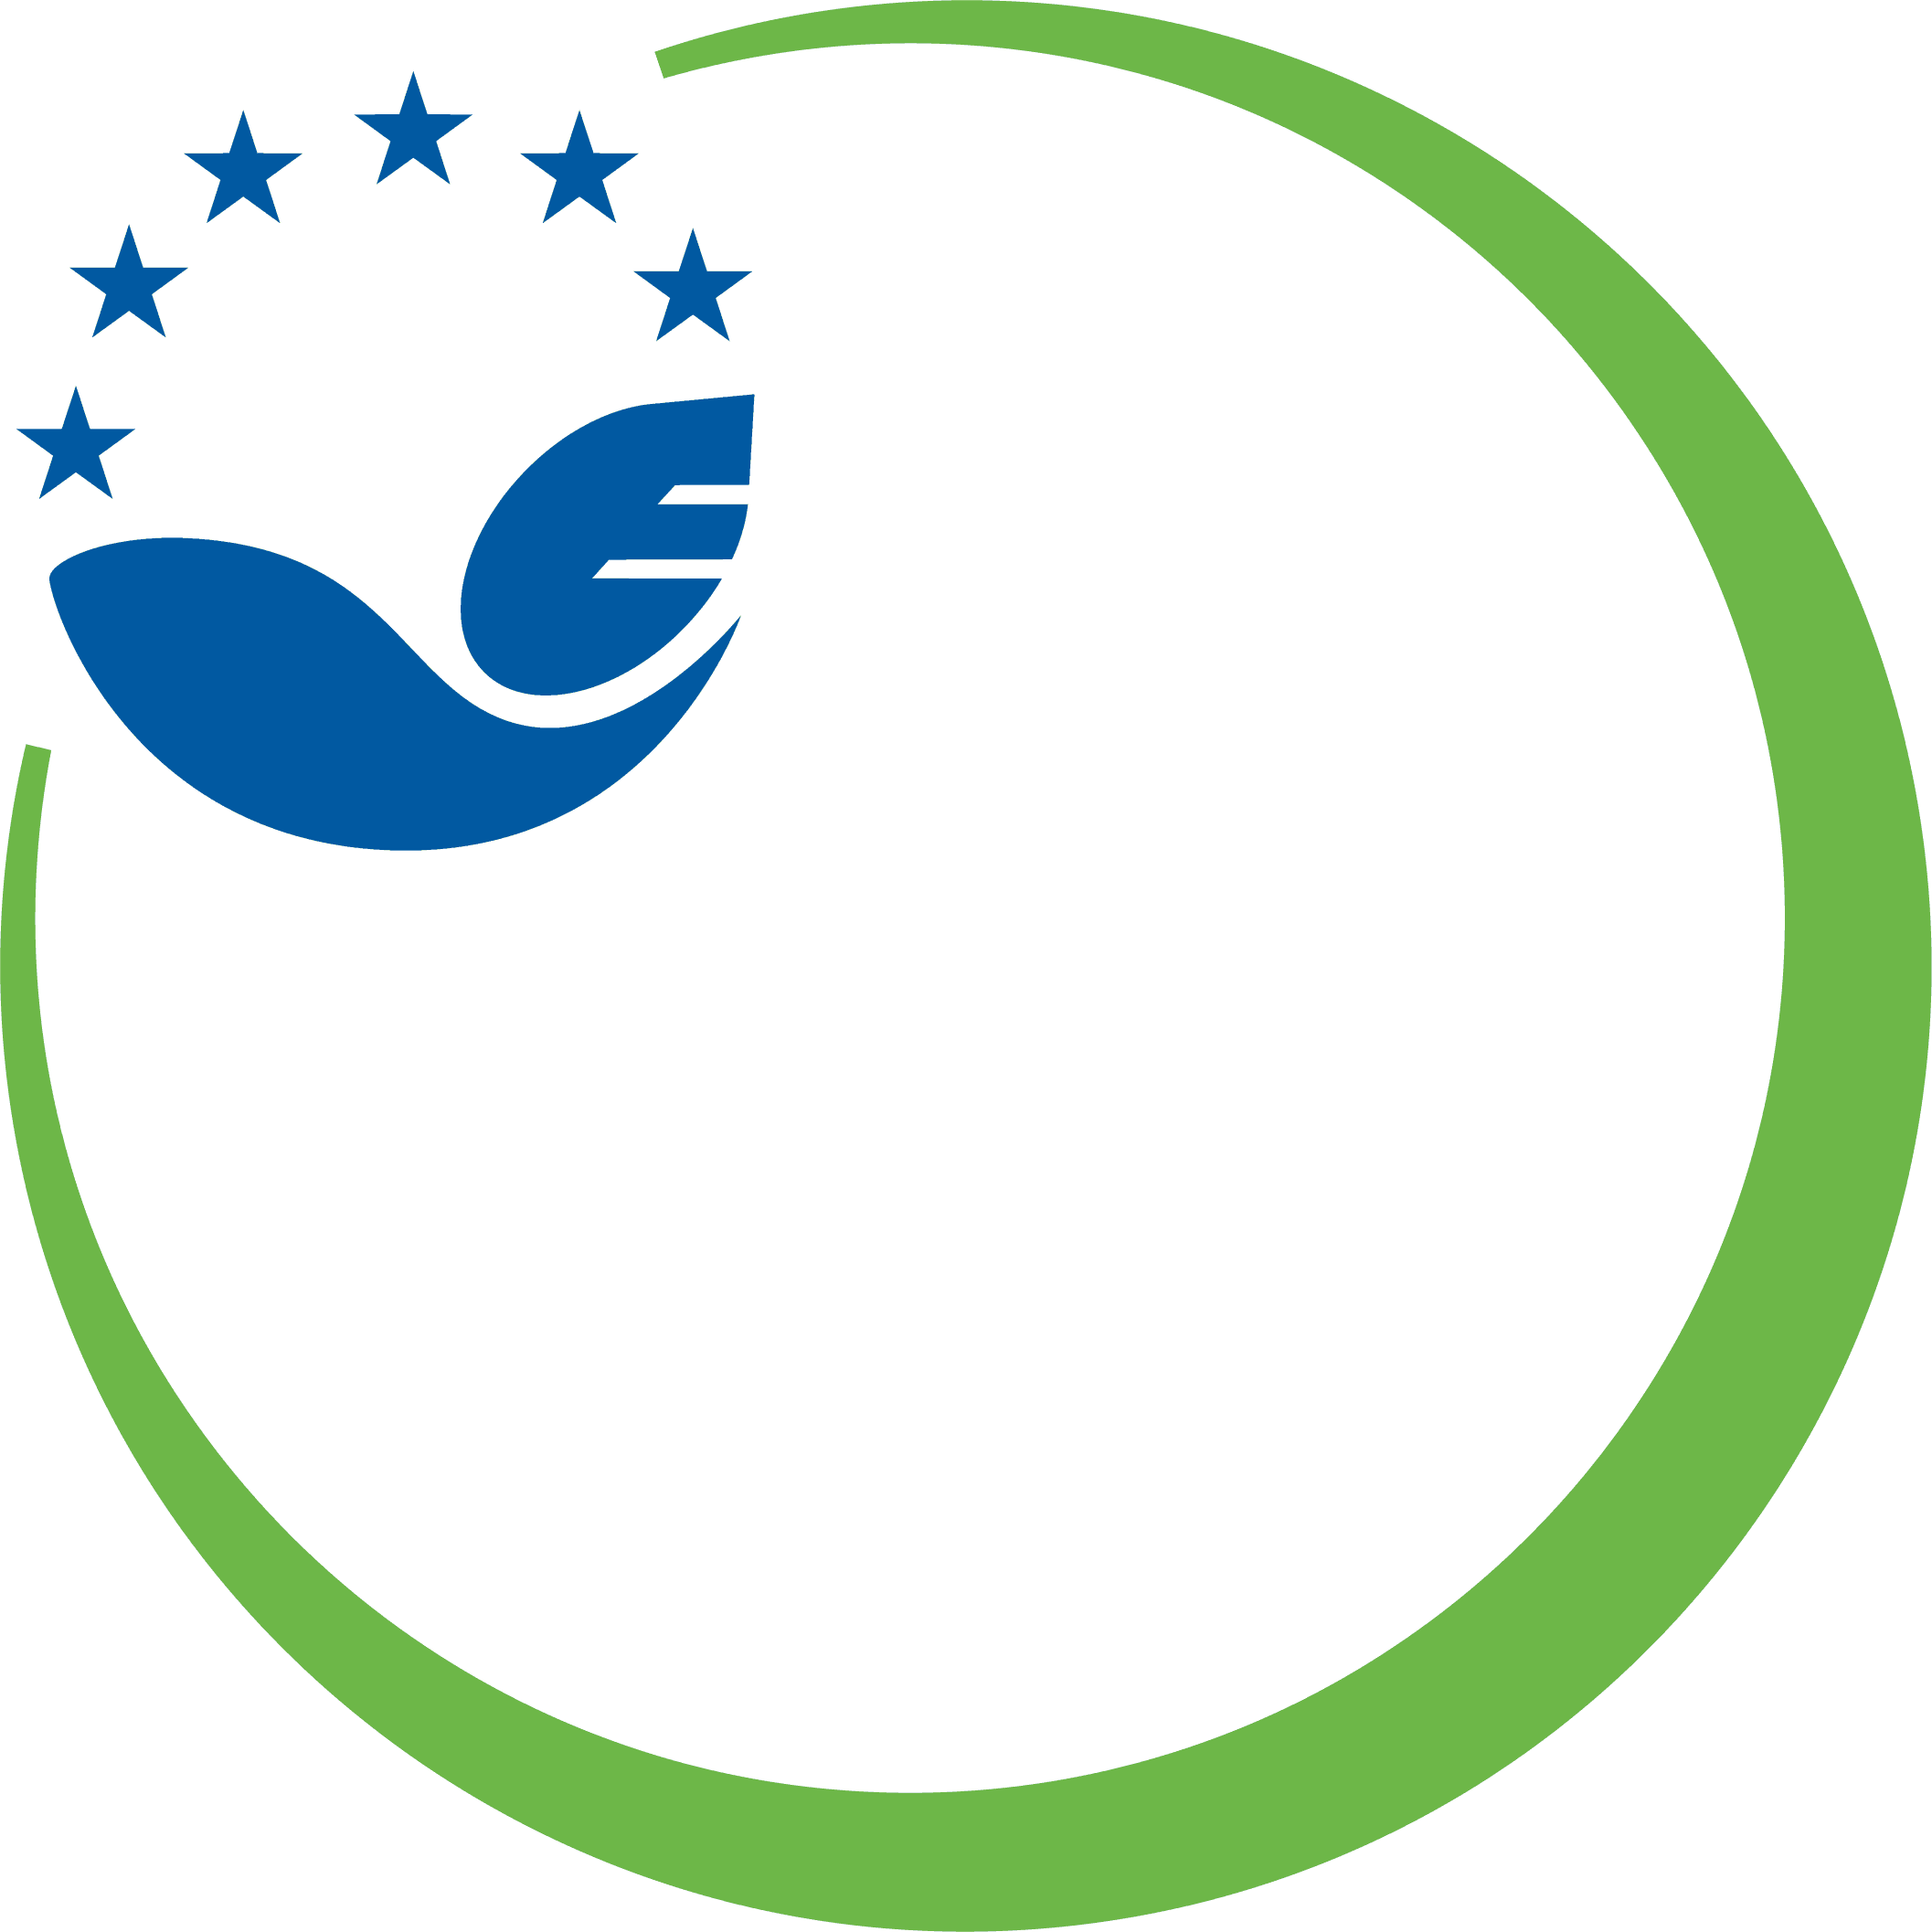 Umweltmanagement-Preis 2021 in drei Kategorien an fünf Unternehmen – u.a. an Uzin